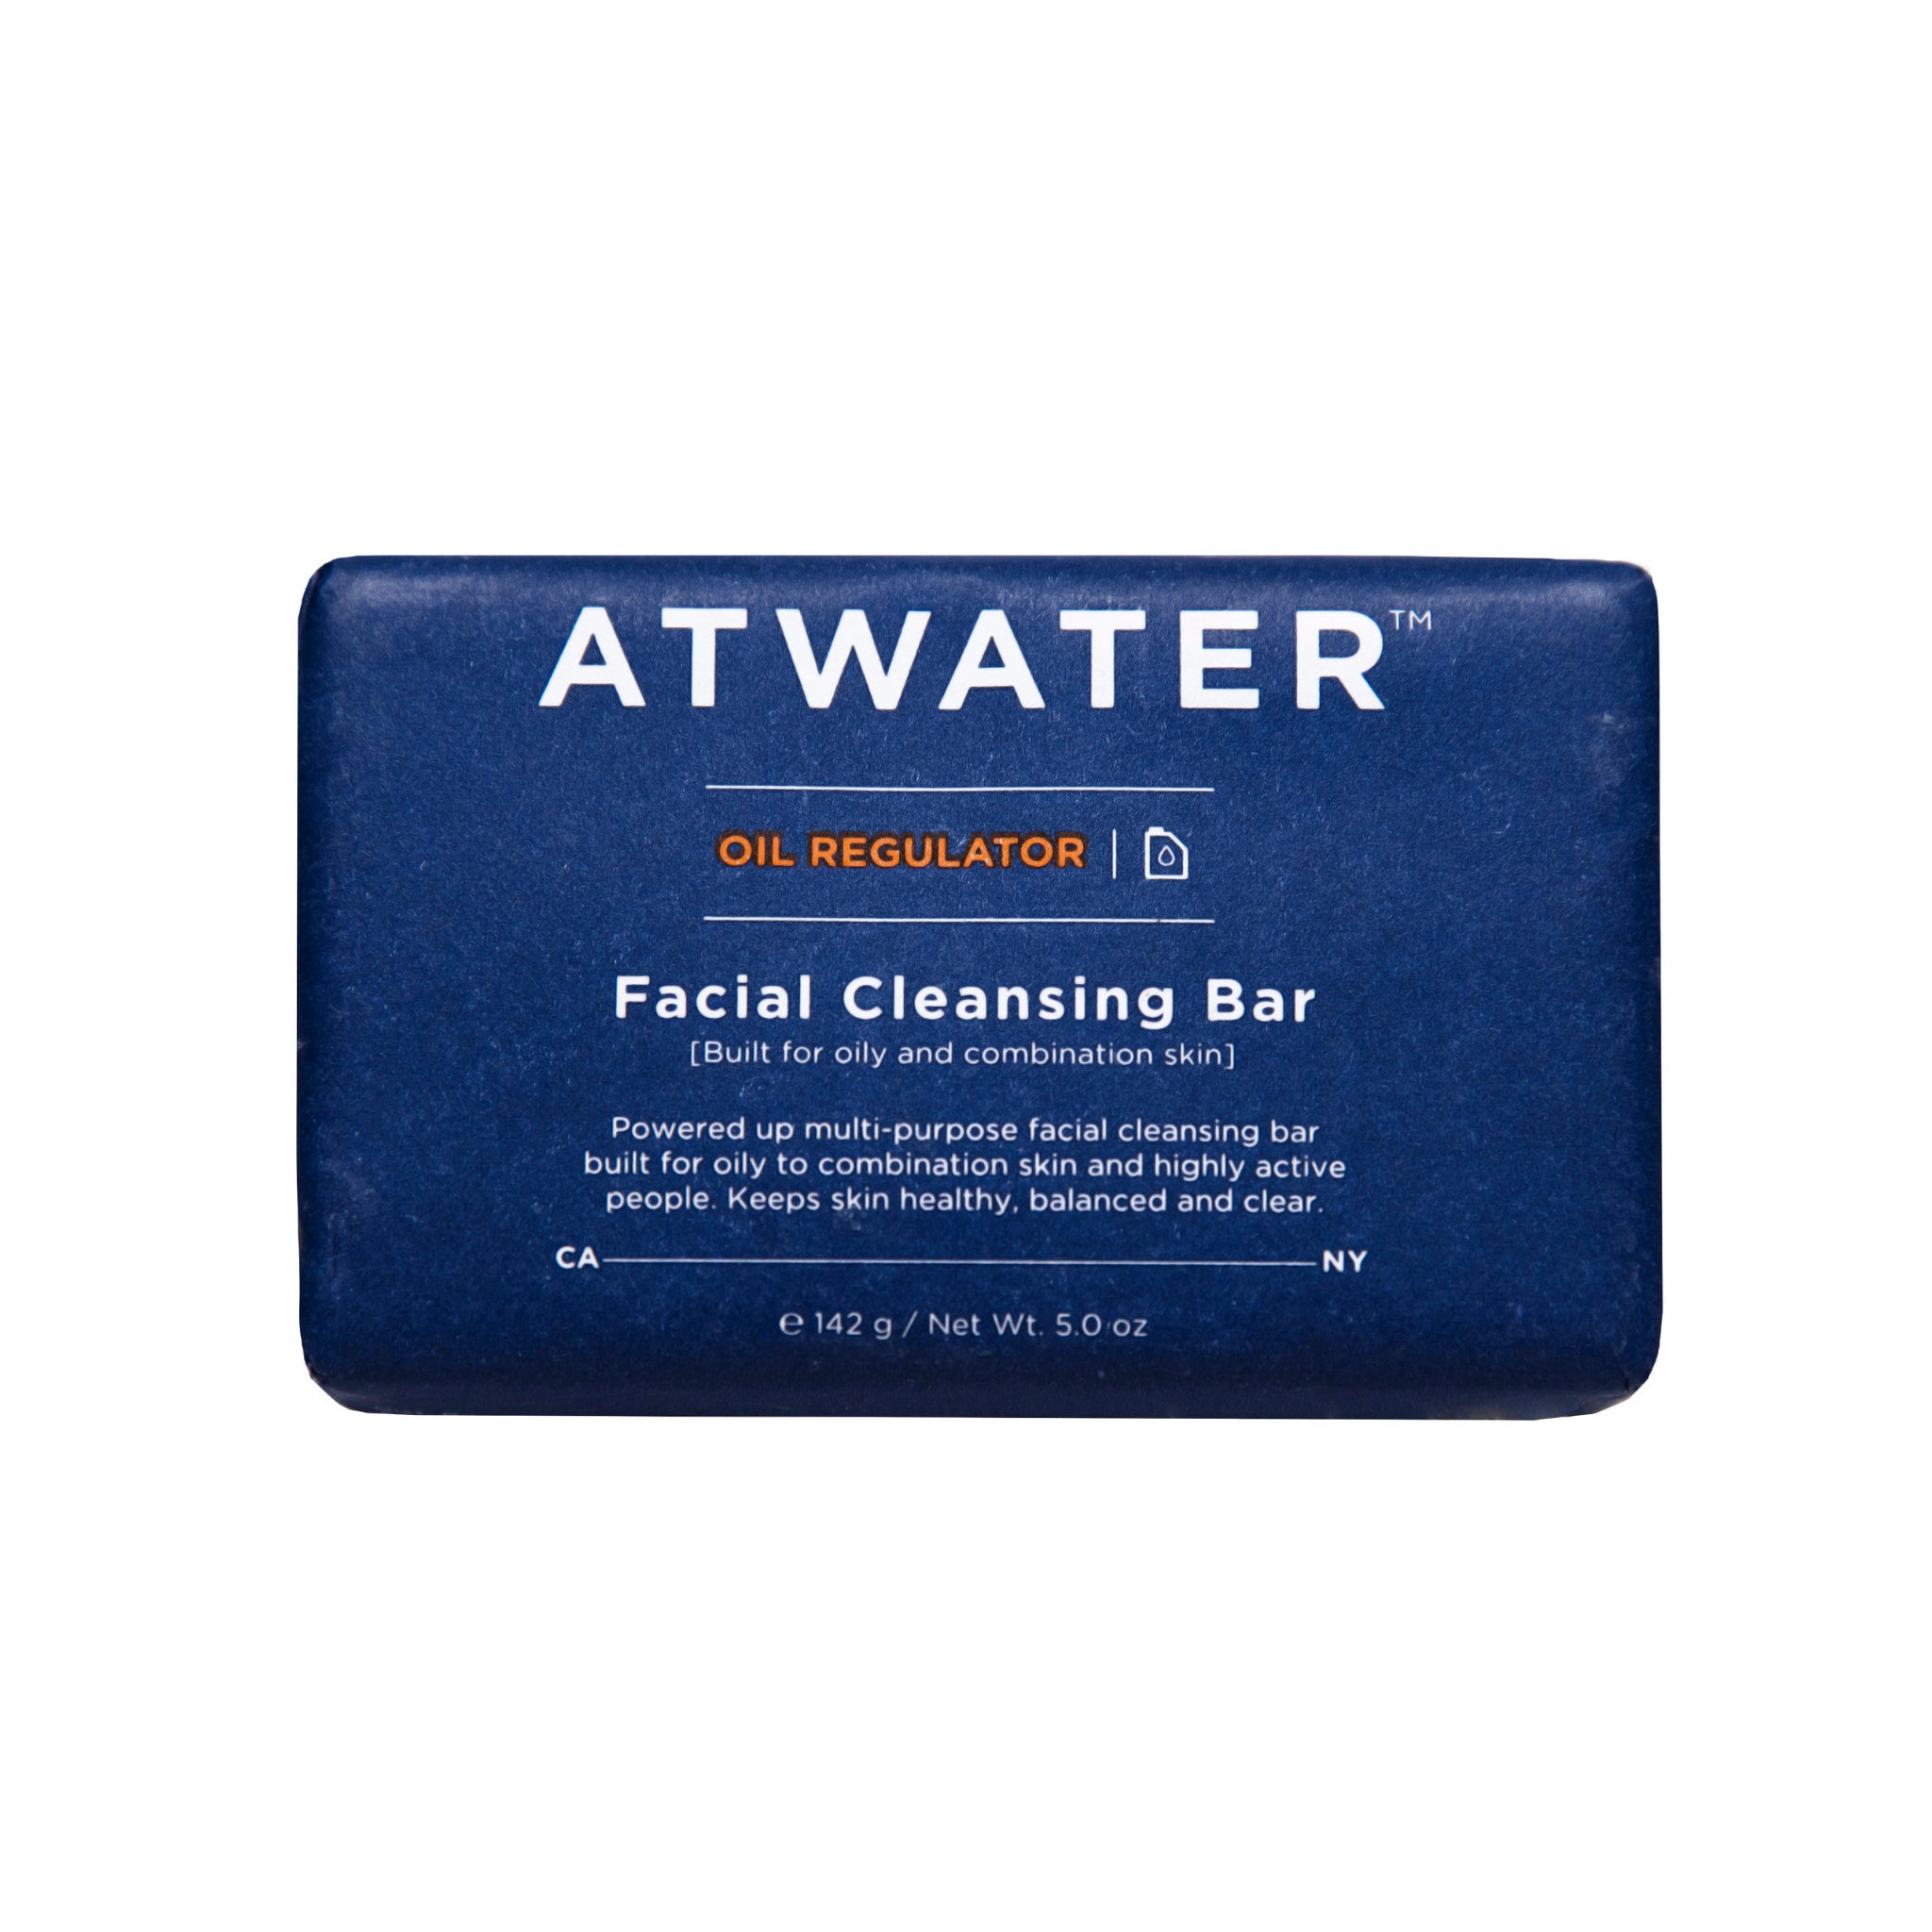 Atwater Oil Regulator Facial Cleansing Bar main image.